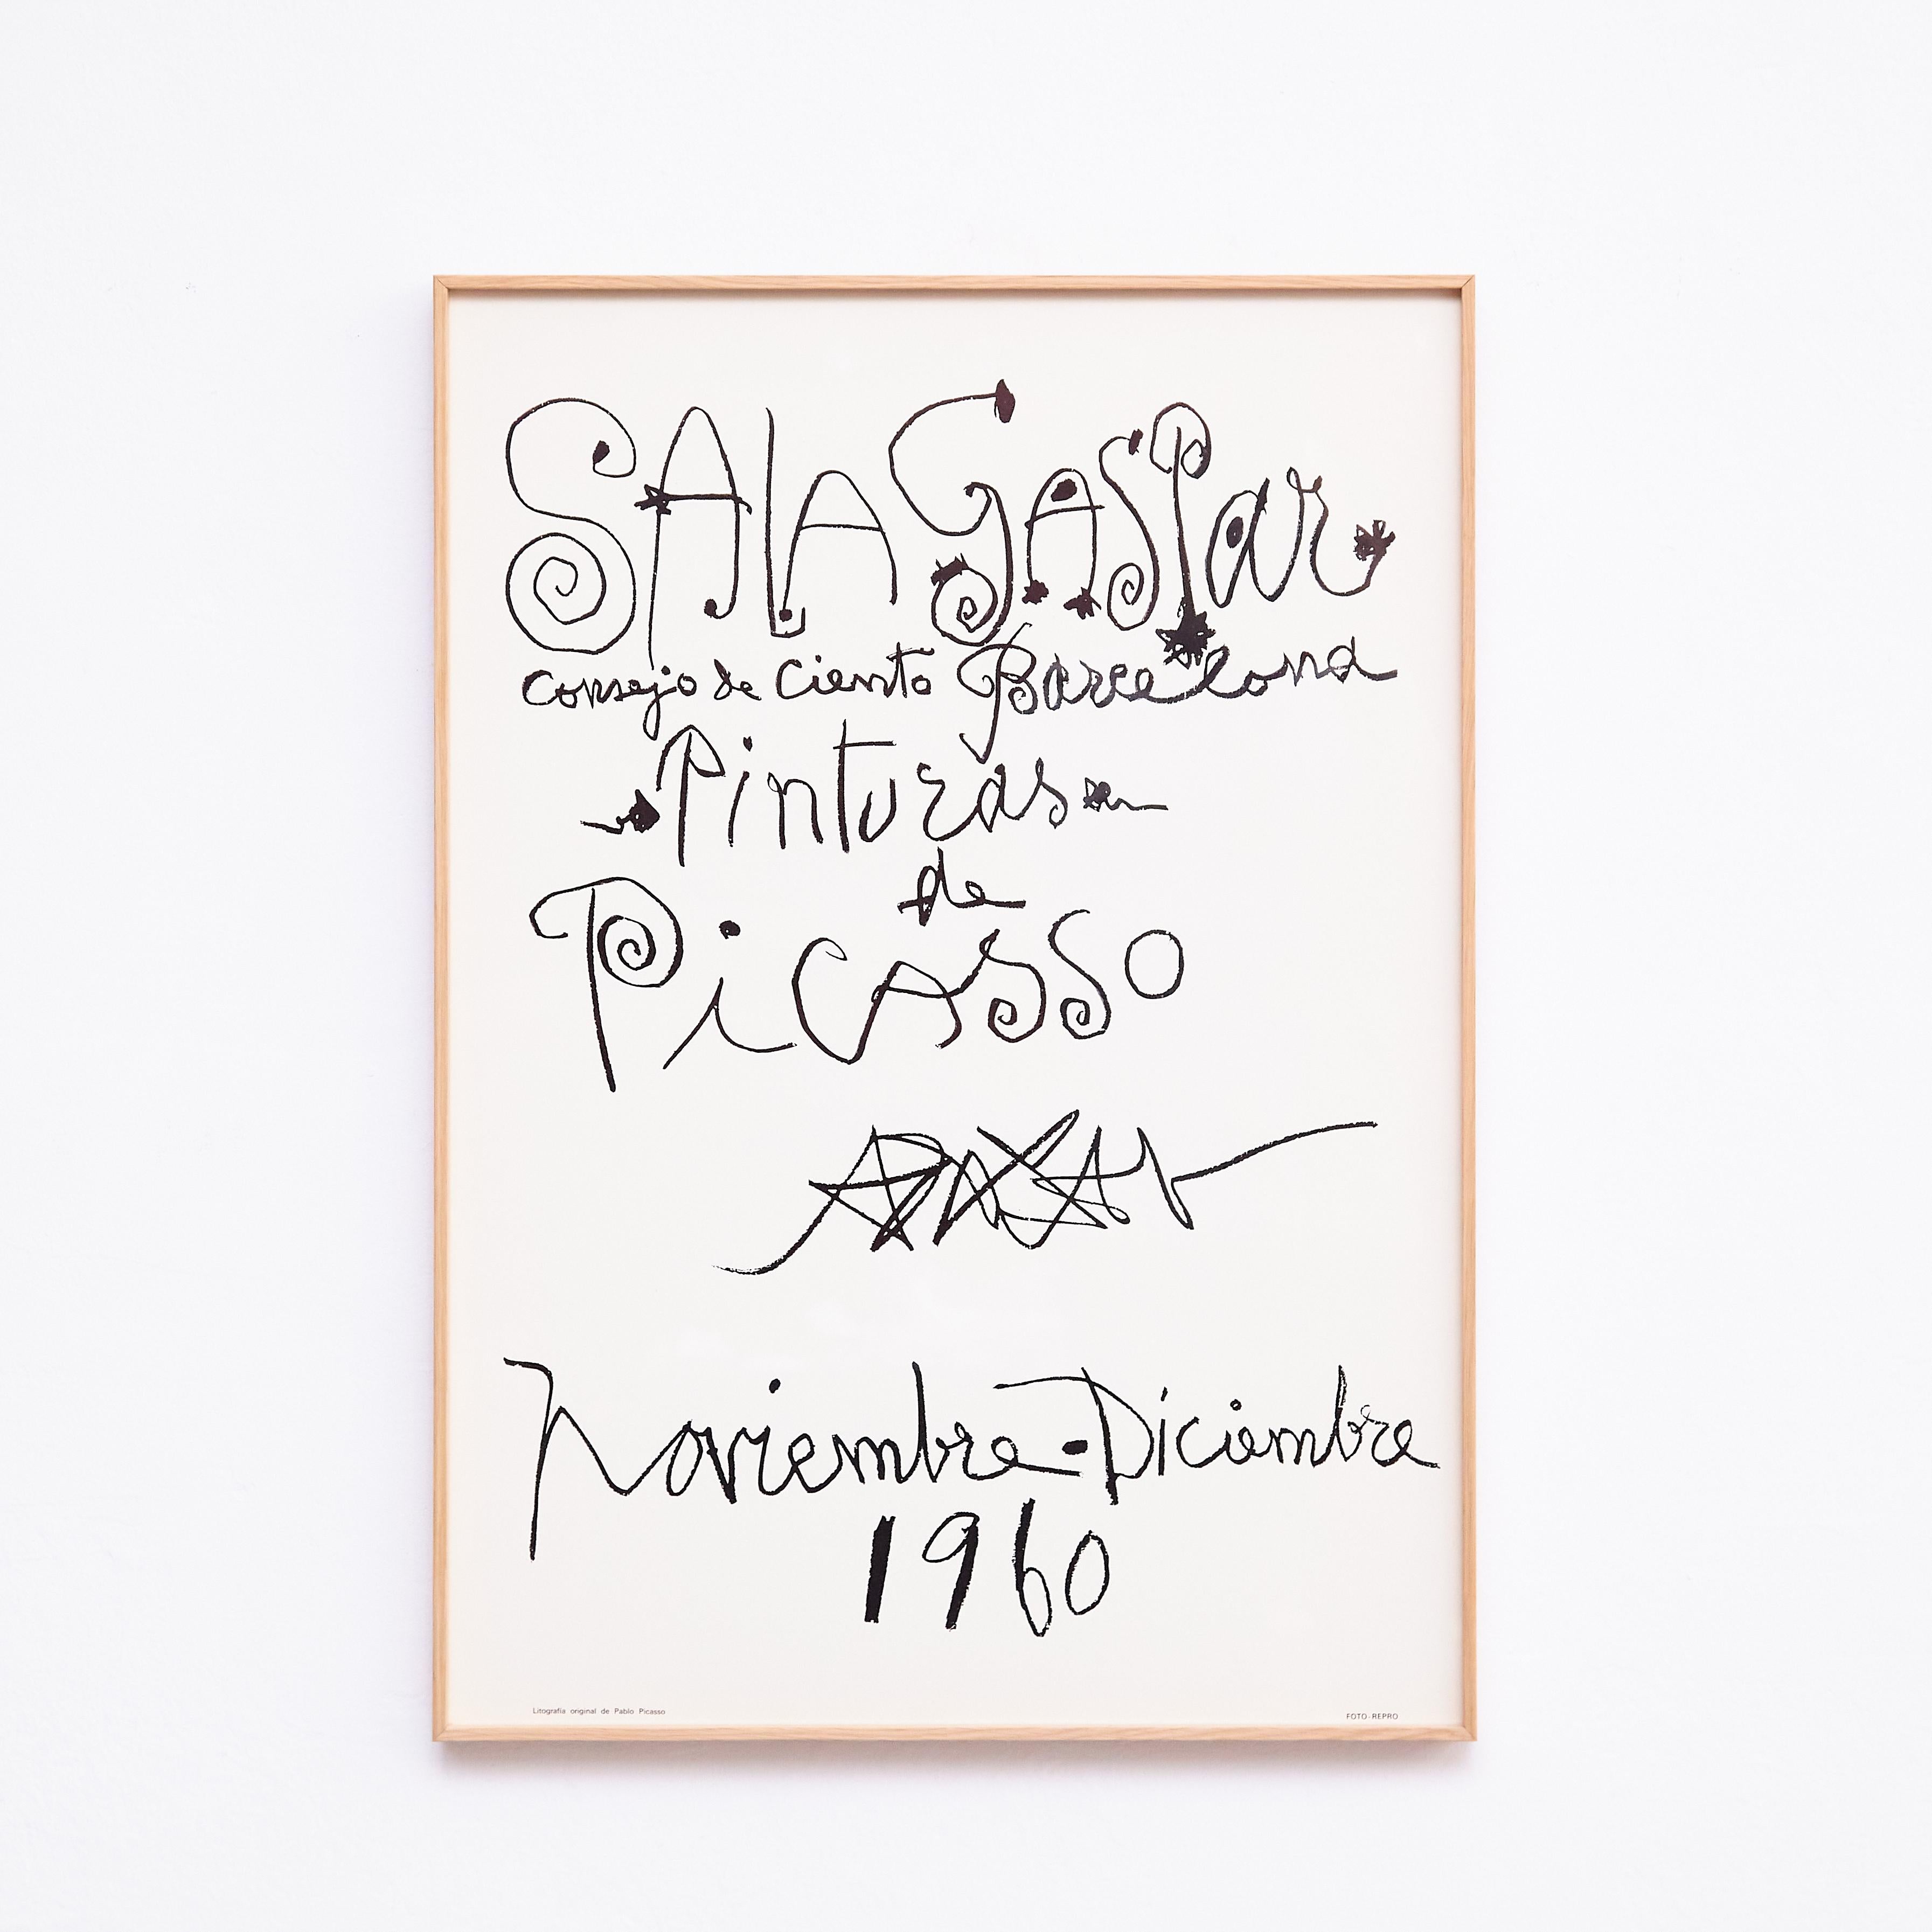 Mid-Century Modern Pablo Picasso Vintage Exhibition Poster, 1968